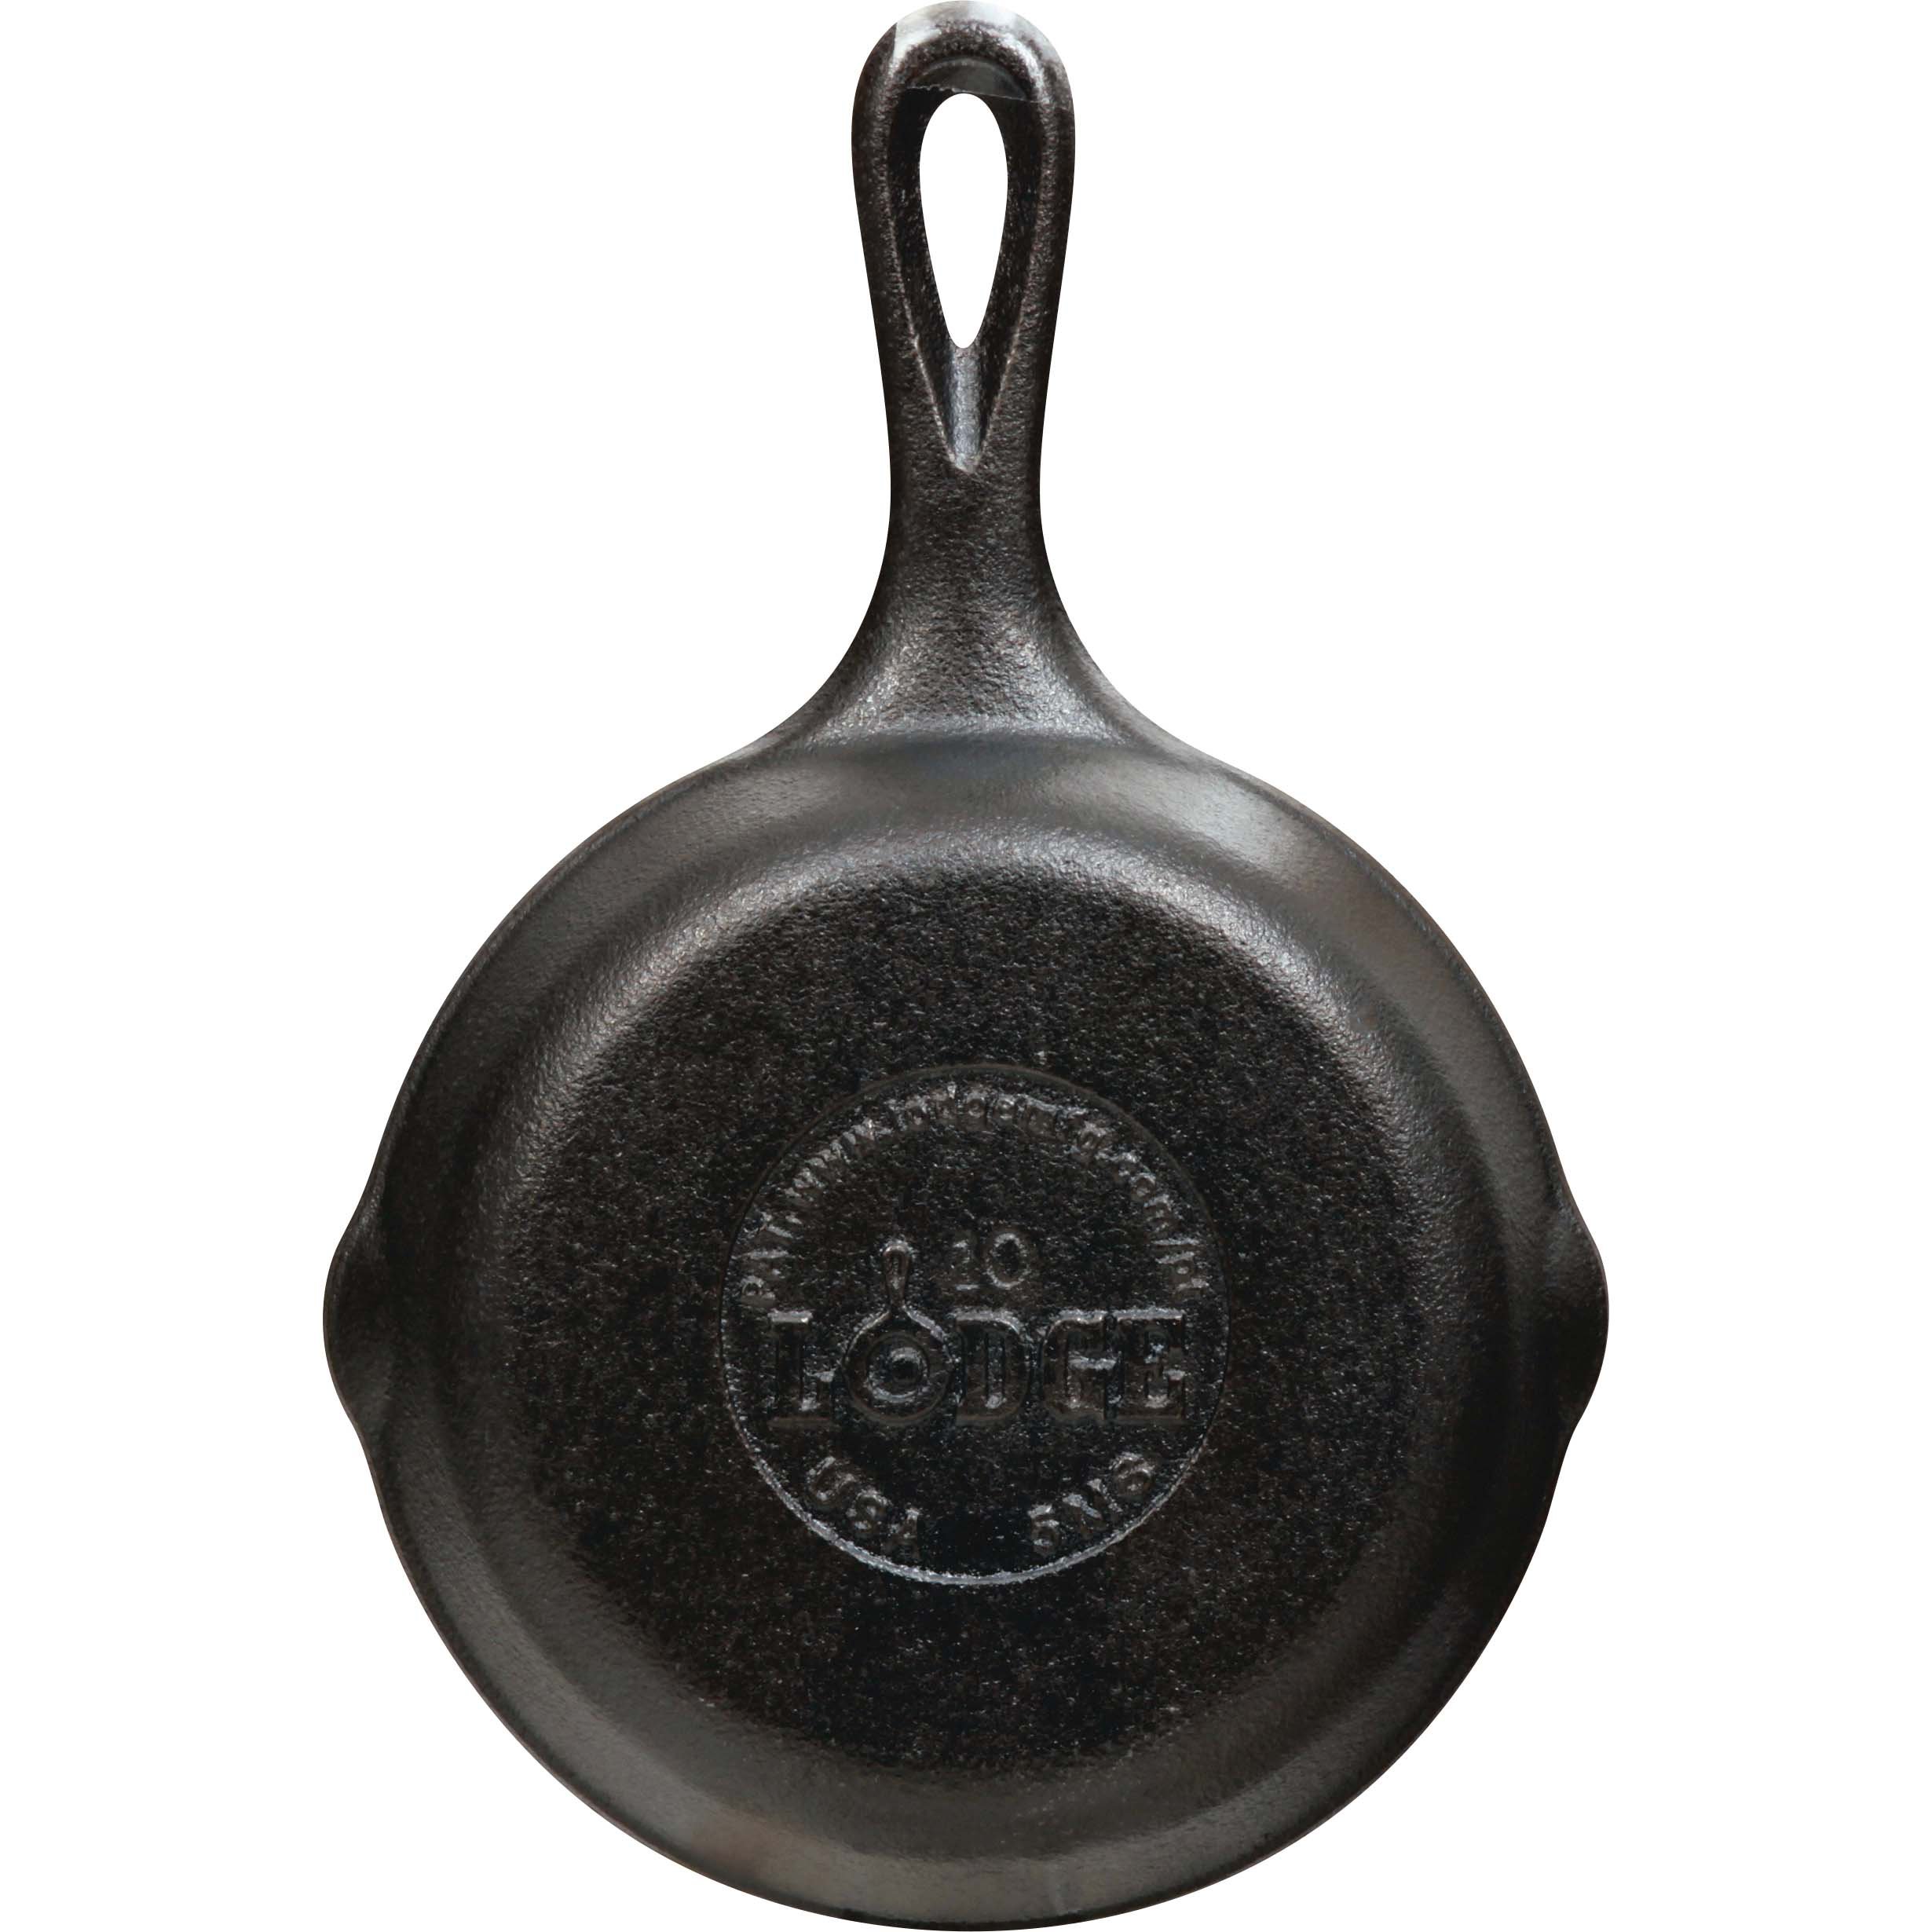 Lodge Cast Iron Round Griddle - Shop Frying Pans & Griddles at H-E-B